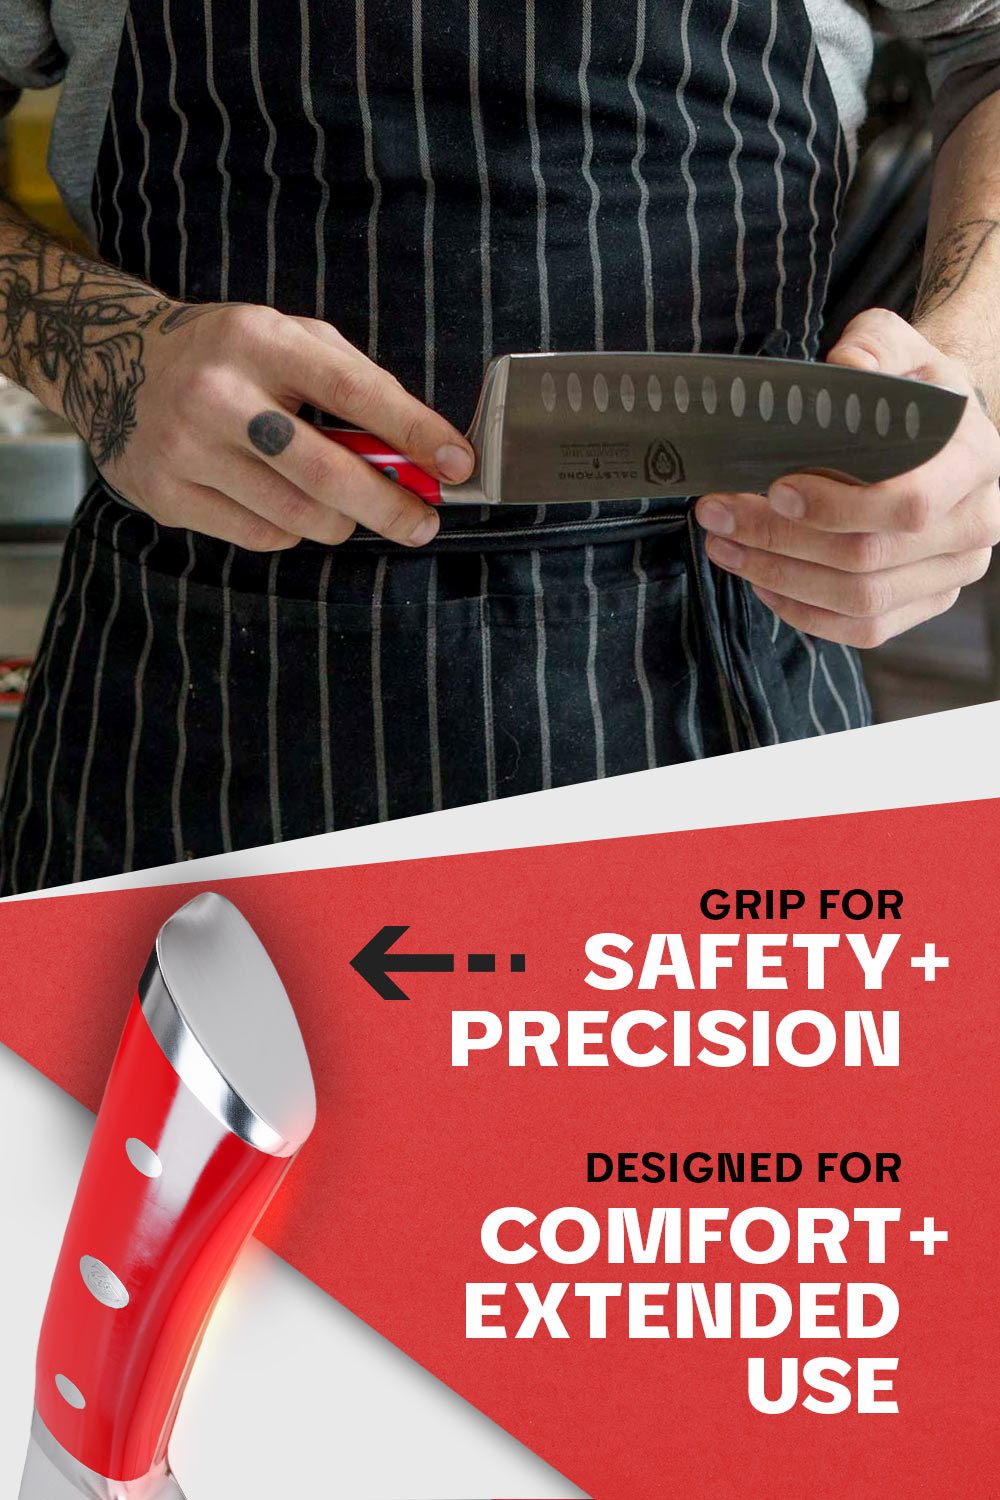 DALSTRONG Santoku Knife - Gladiator Series - German HC Steel - 7 (180mm) 